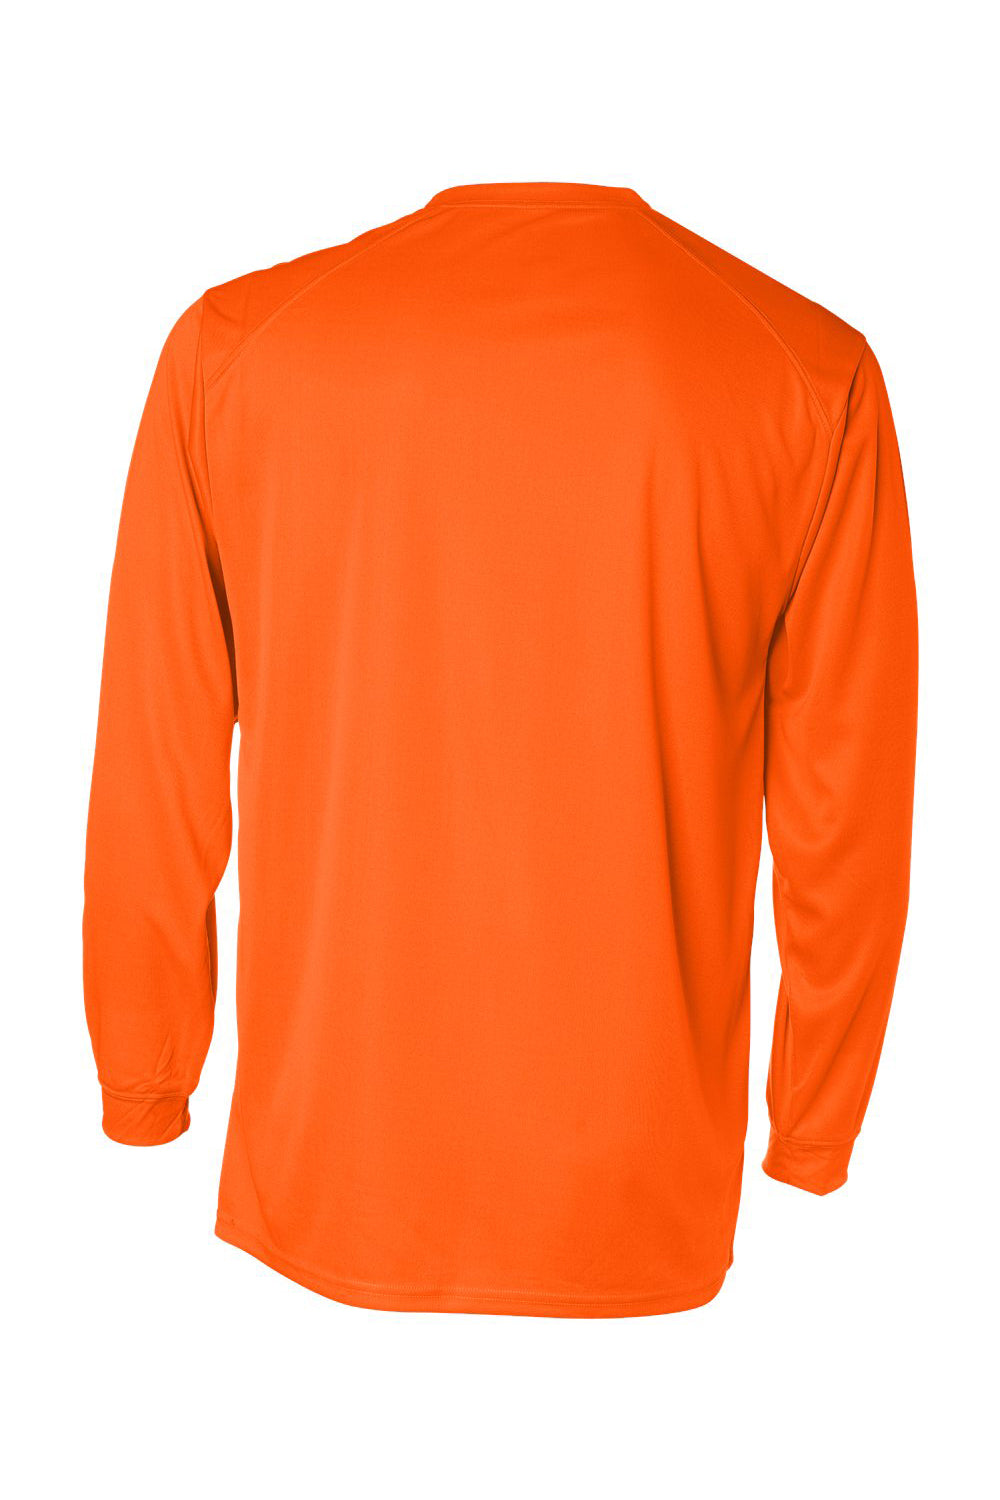 Badger 4104 Mens B-Core Moisture Wicking Long Sleeve Crewneck T-Shirt Safety Orange Flat Back